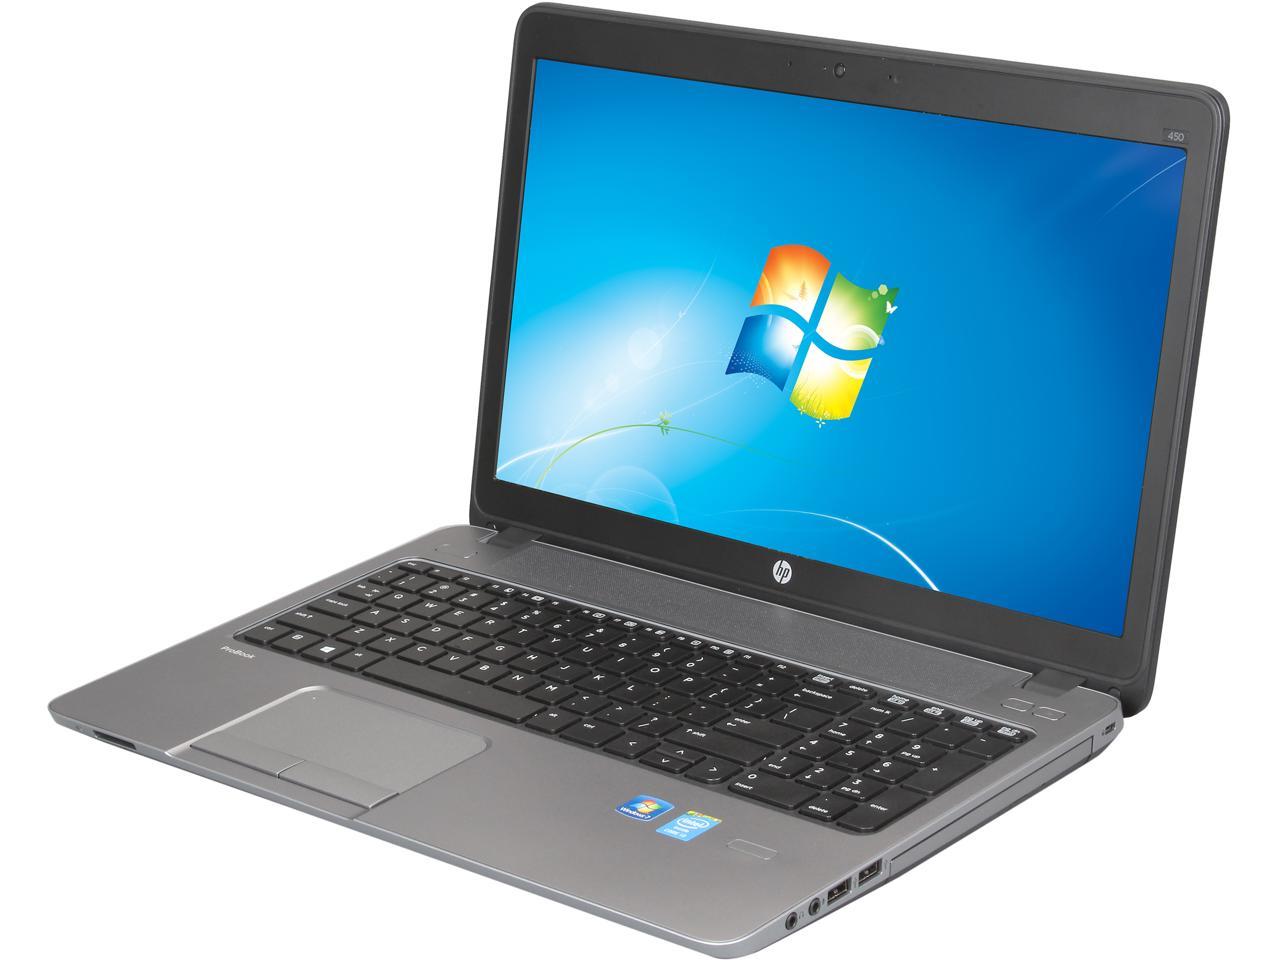 HP Laptop ProBook 450 G1 (F2P36UT#ABA) Intel Core i3 4th Gen 4000M 